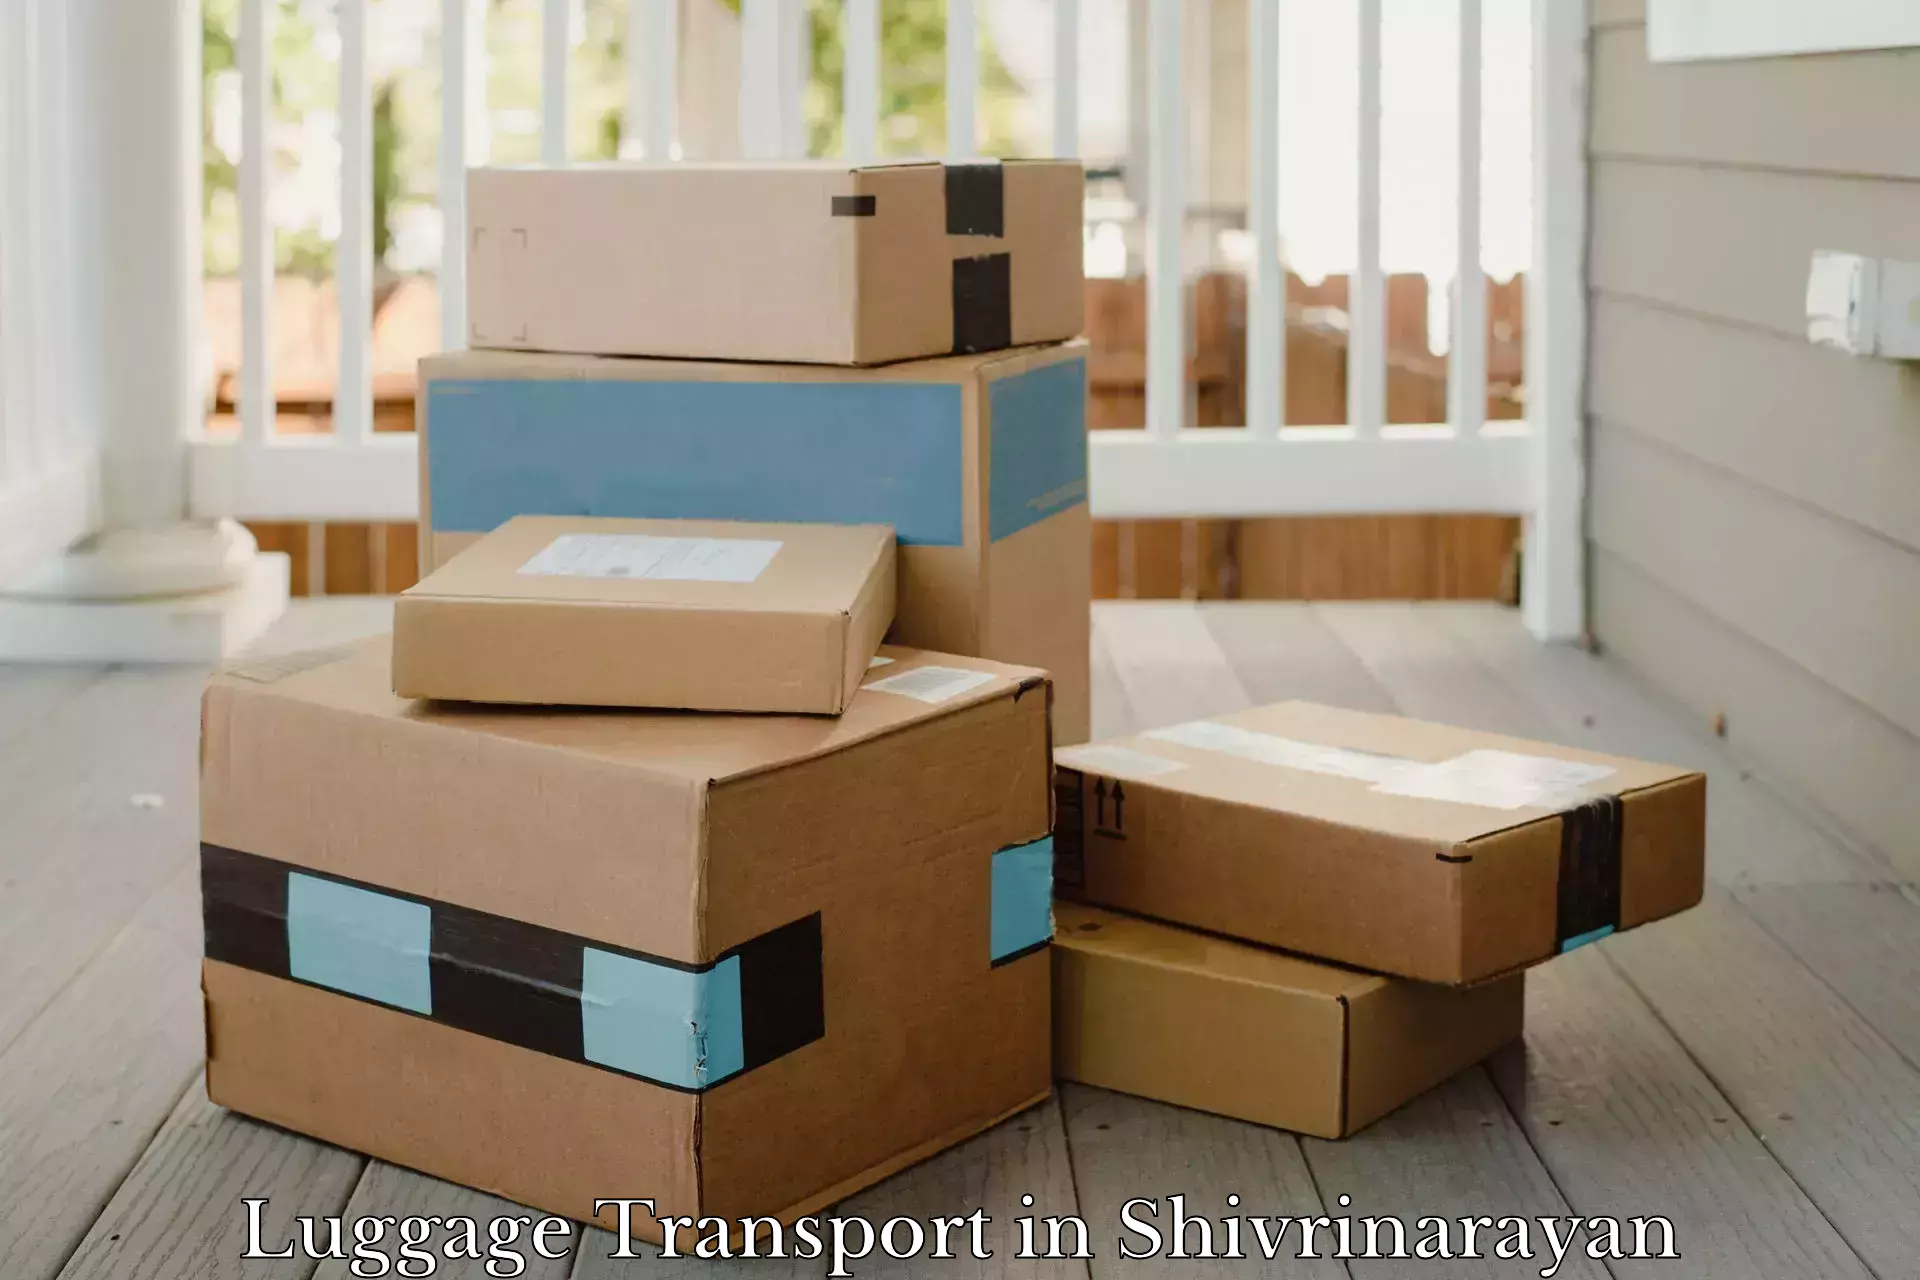 Luggage delivery logistics in Shivrinarayan